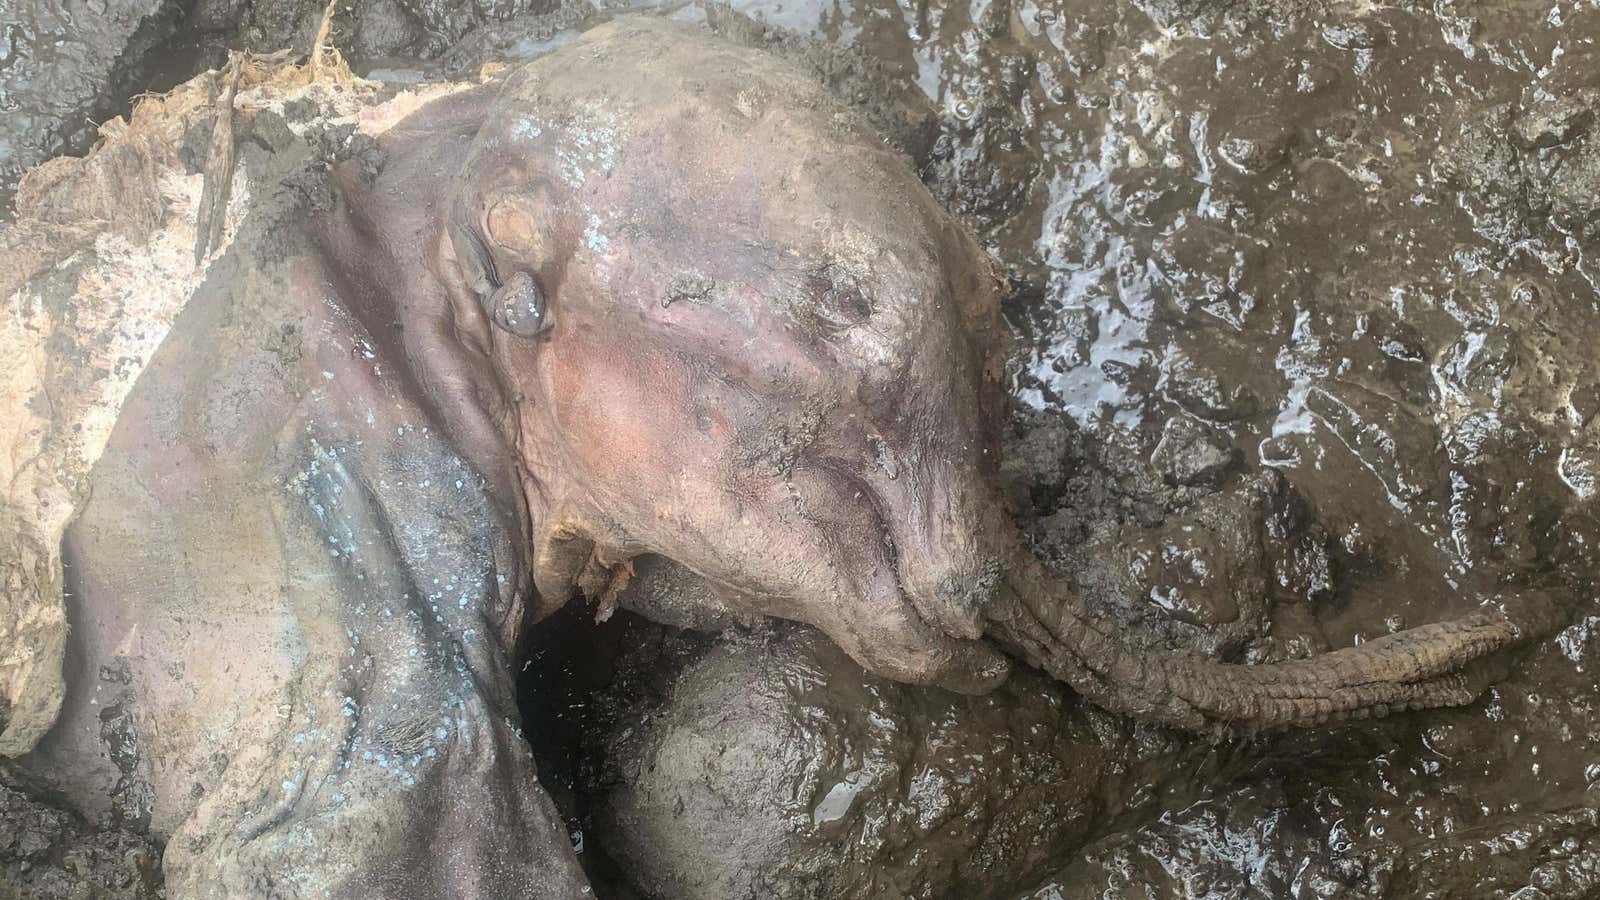 Nun cho ga, the mummified baby woolly mammoth, where she was found at the Yukon mine.